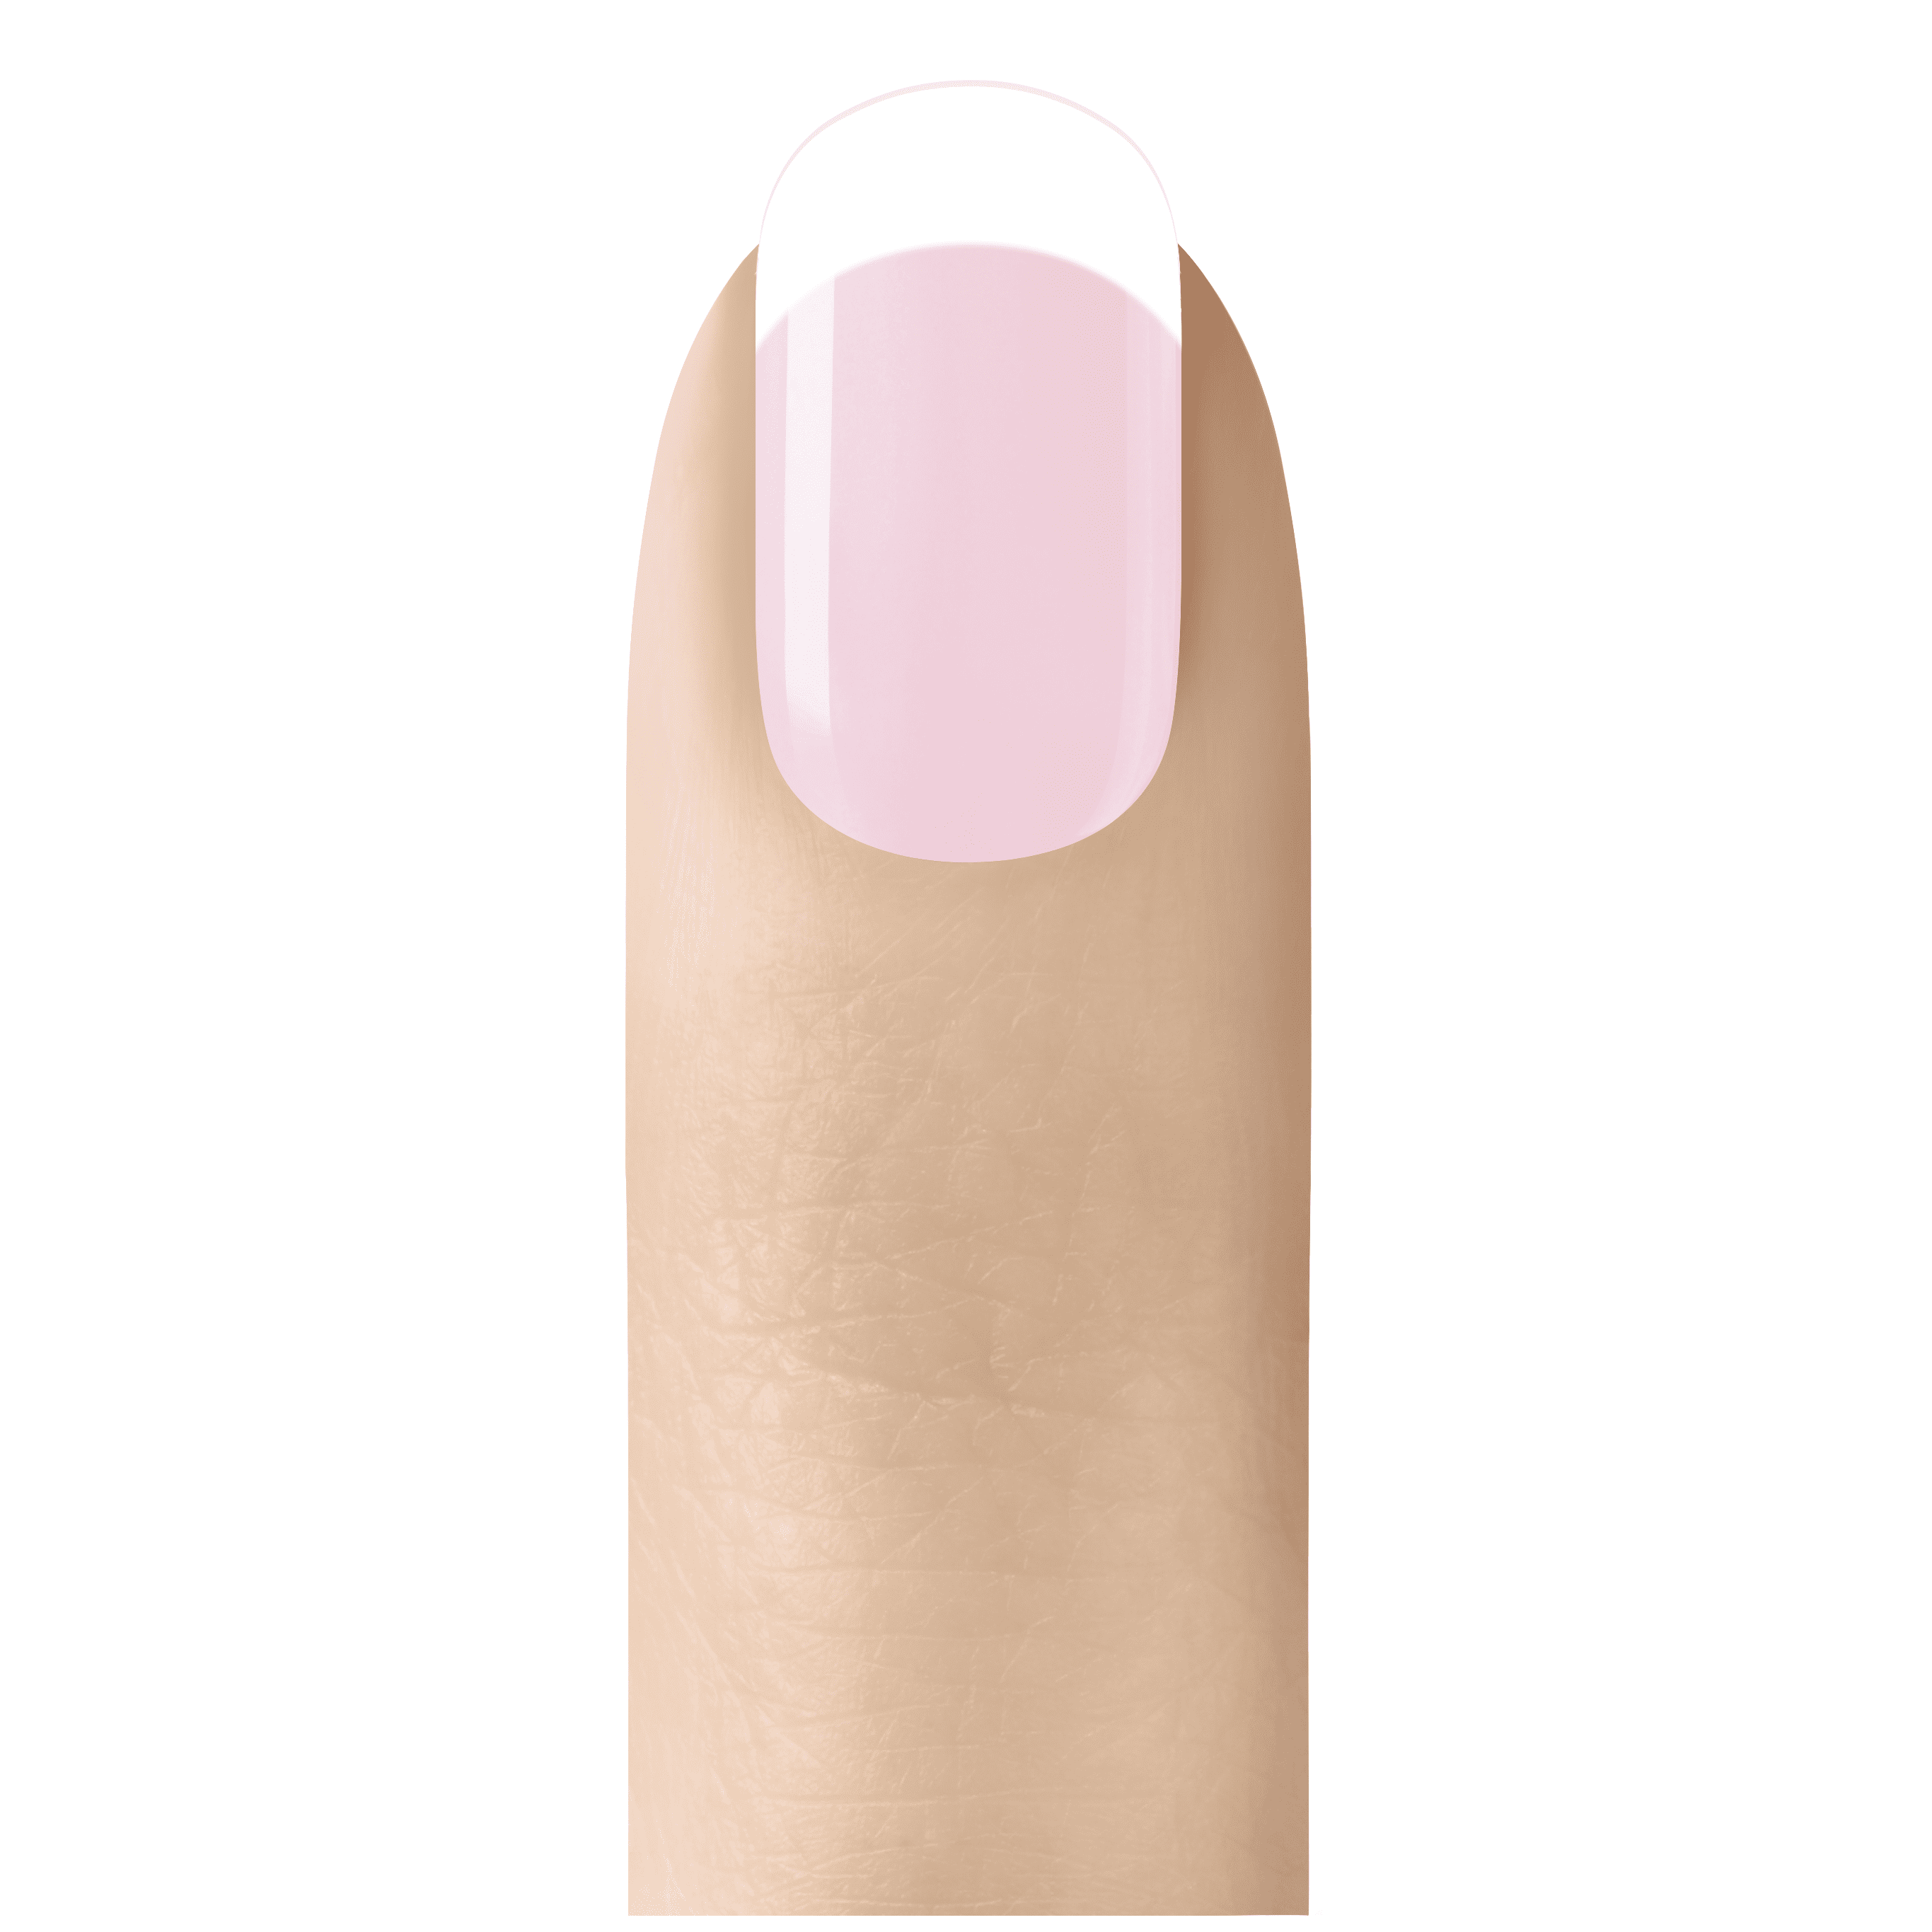 SensatioNail Nail Polish (Pink), Manicure, 0.25 fl oz - Walmart.com